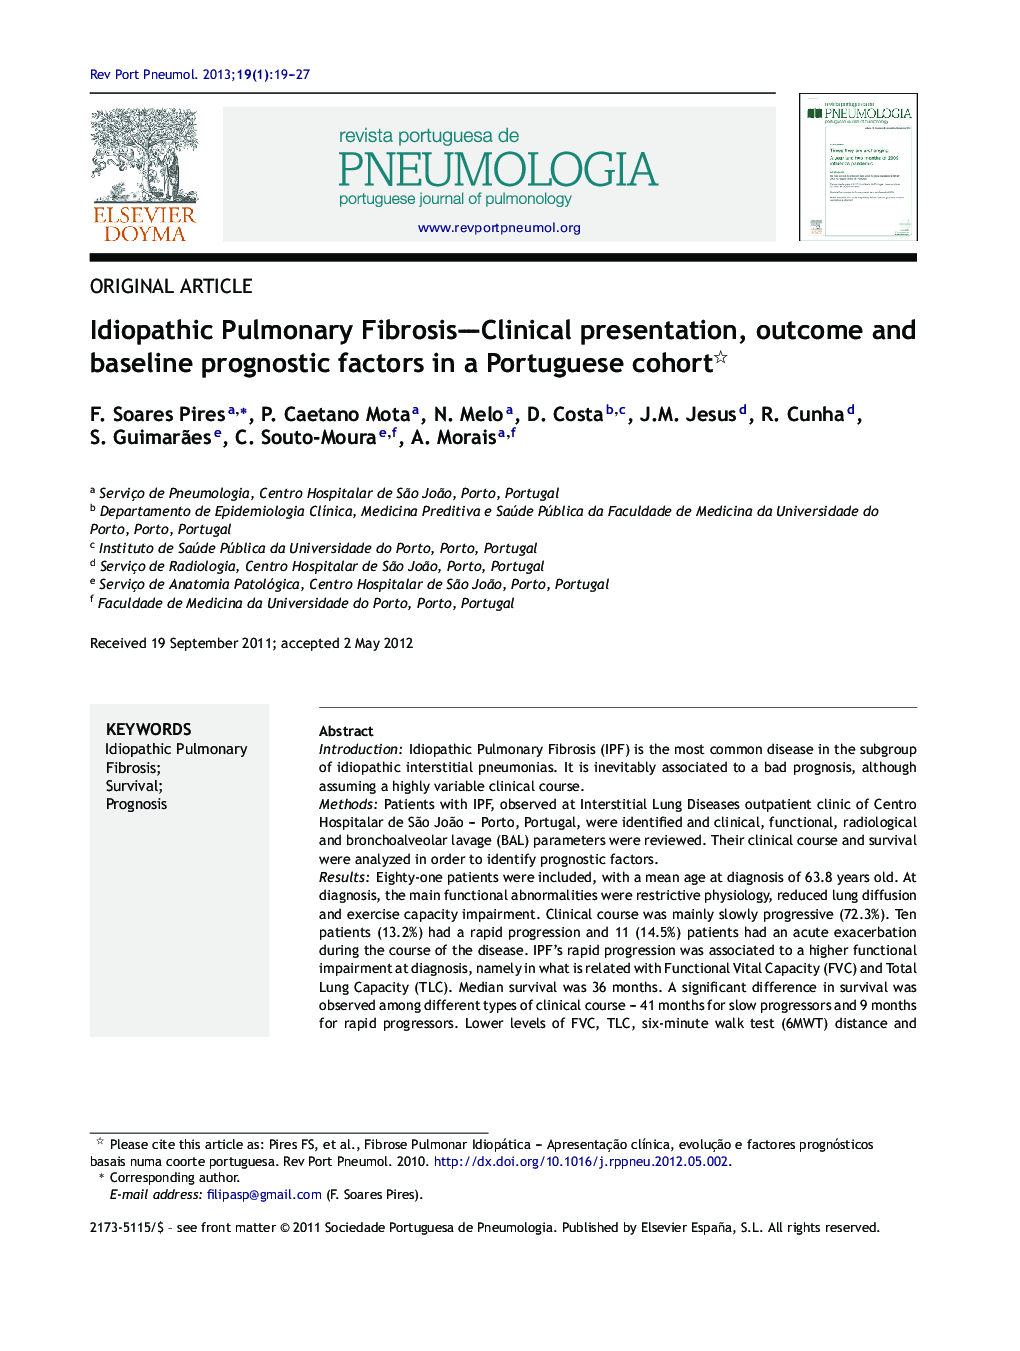 Idiopathic Pulmonary Fibrosis-Clinical presentation, outcome and baseline prognostic factors in a Portuguese cohort